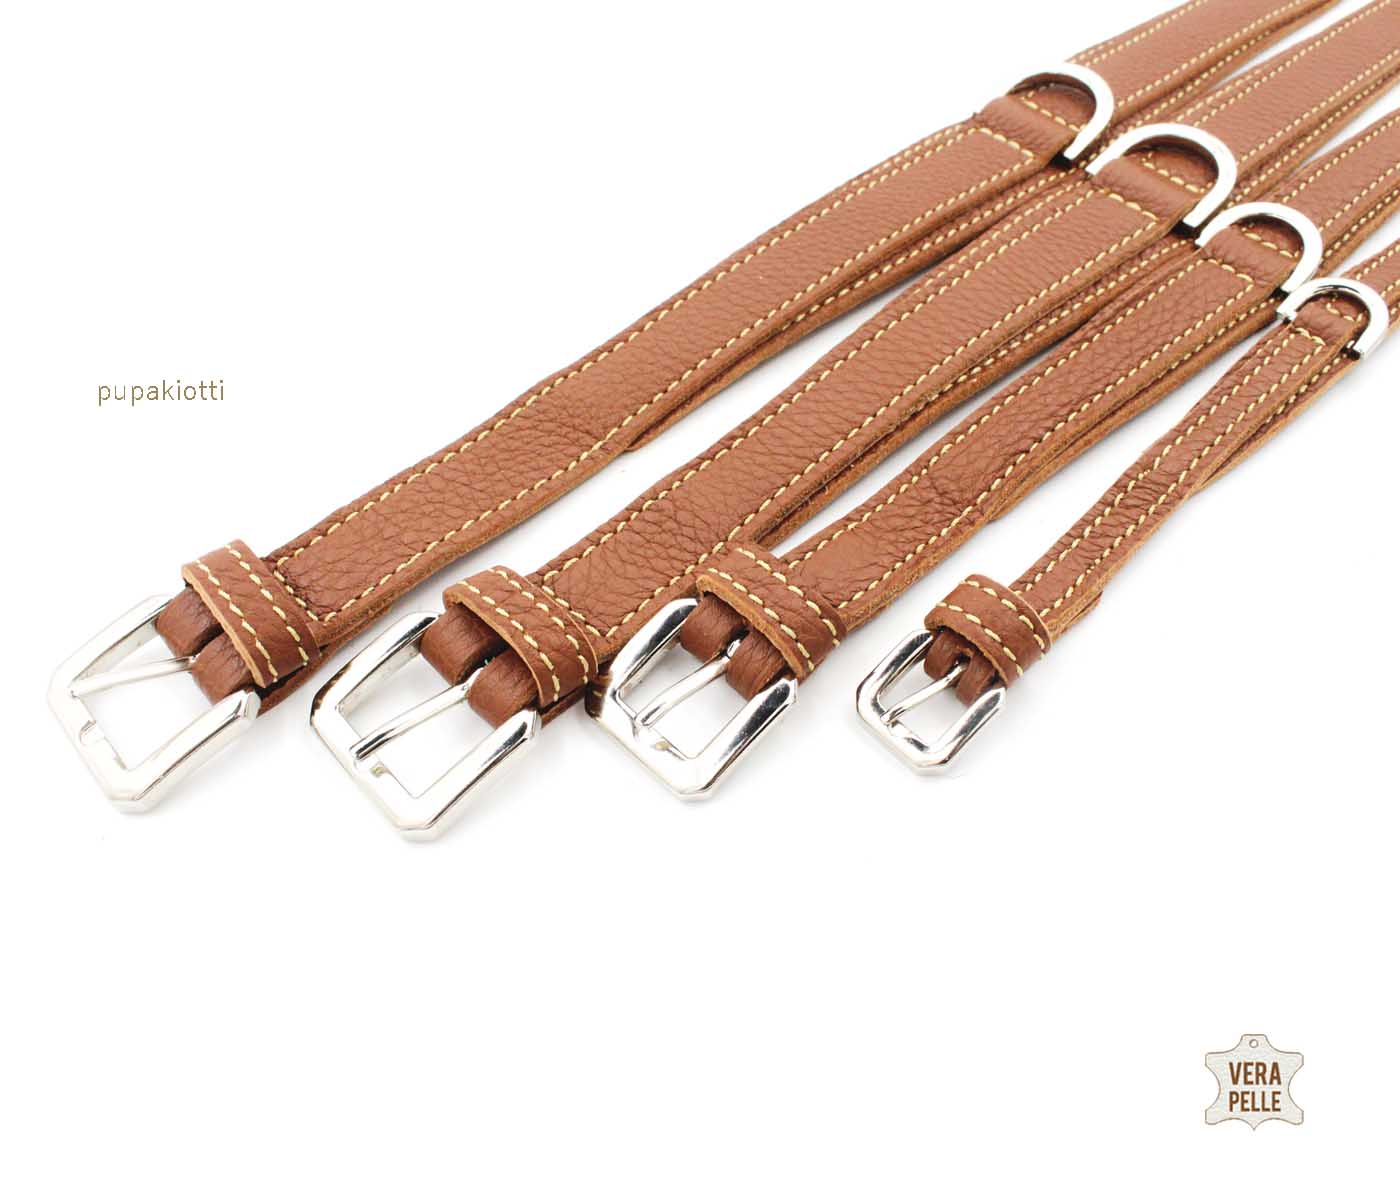 BASIC. Genuine leather collar for dog